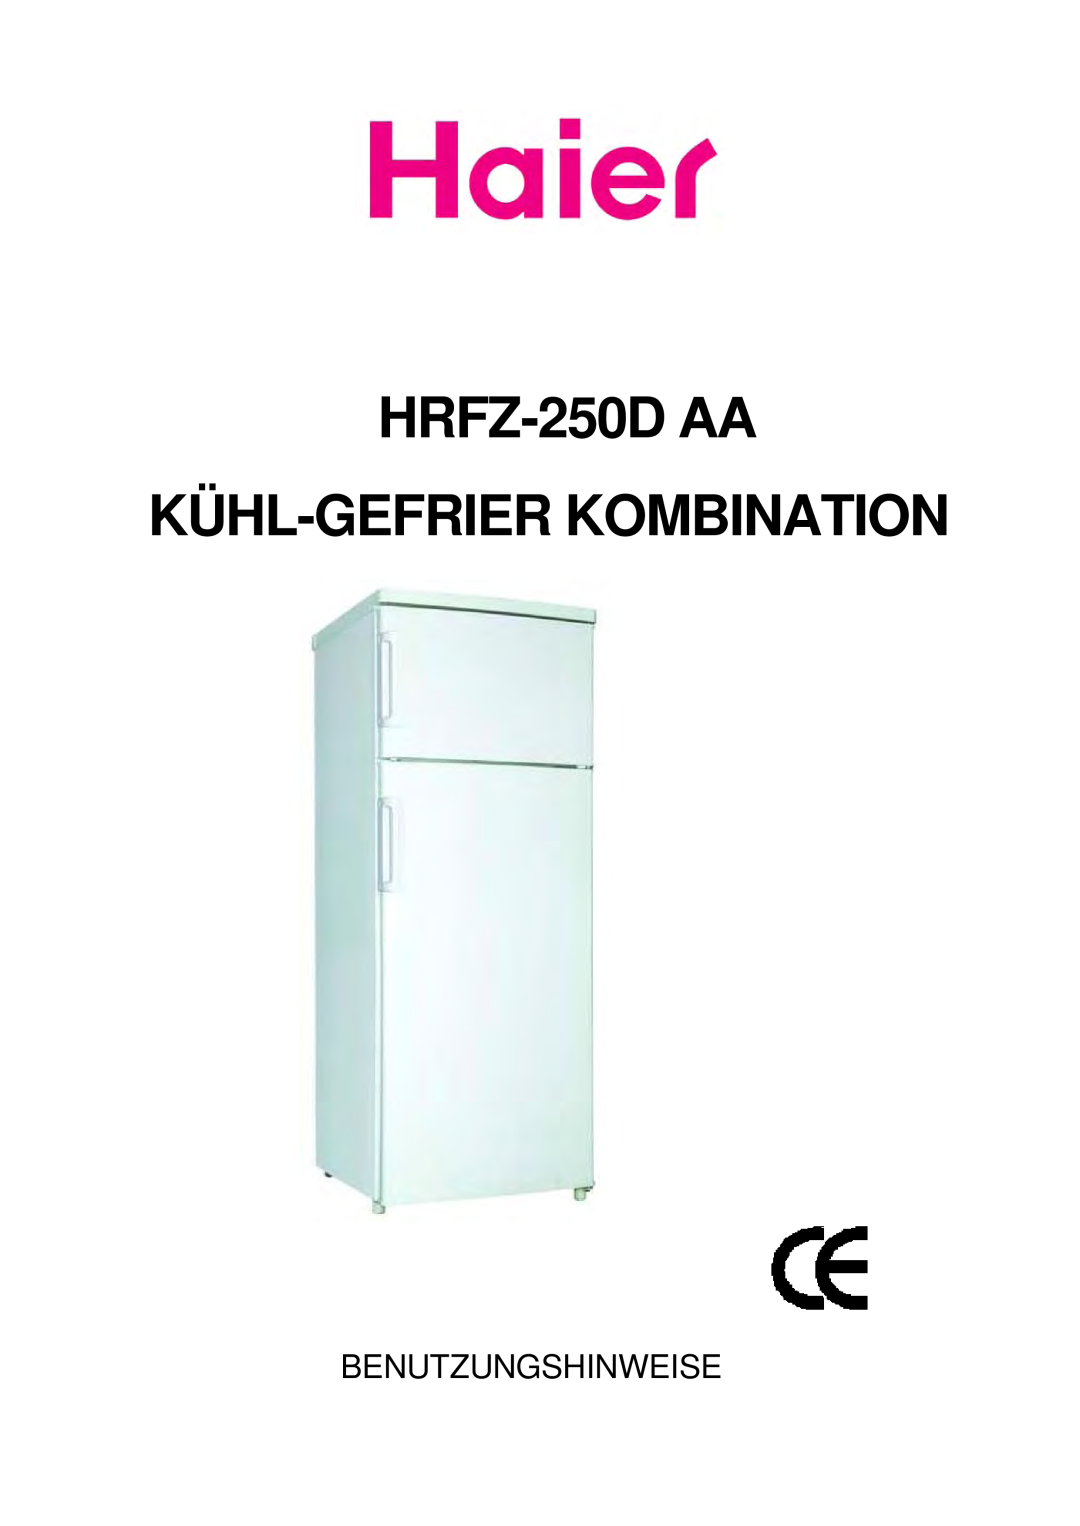 Haier HRFZ-250D AA manual HRFZ-250DAA KÜHL-GEFRIERKOMBINATION, Benutzungshinweise 